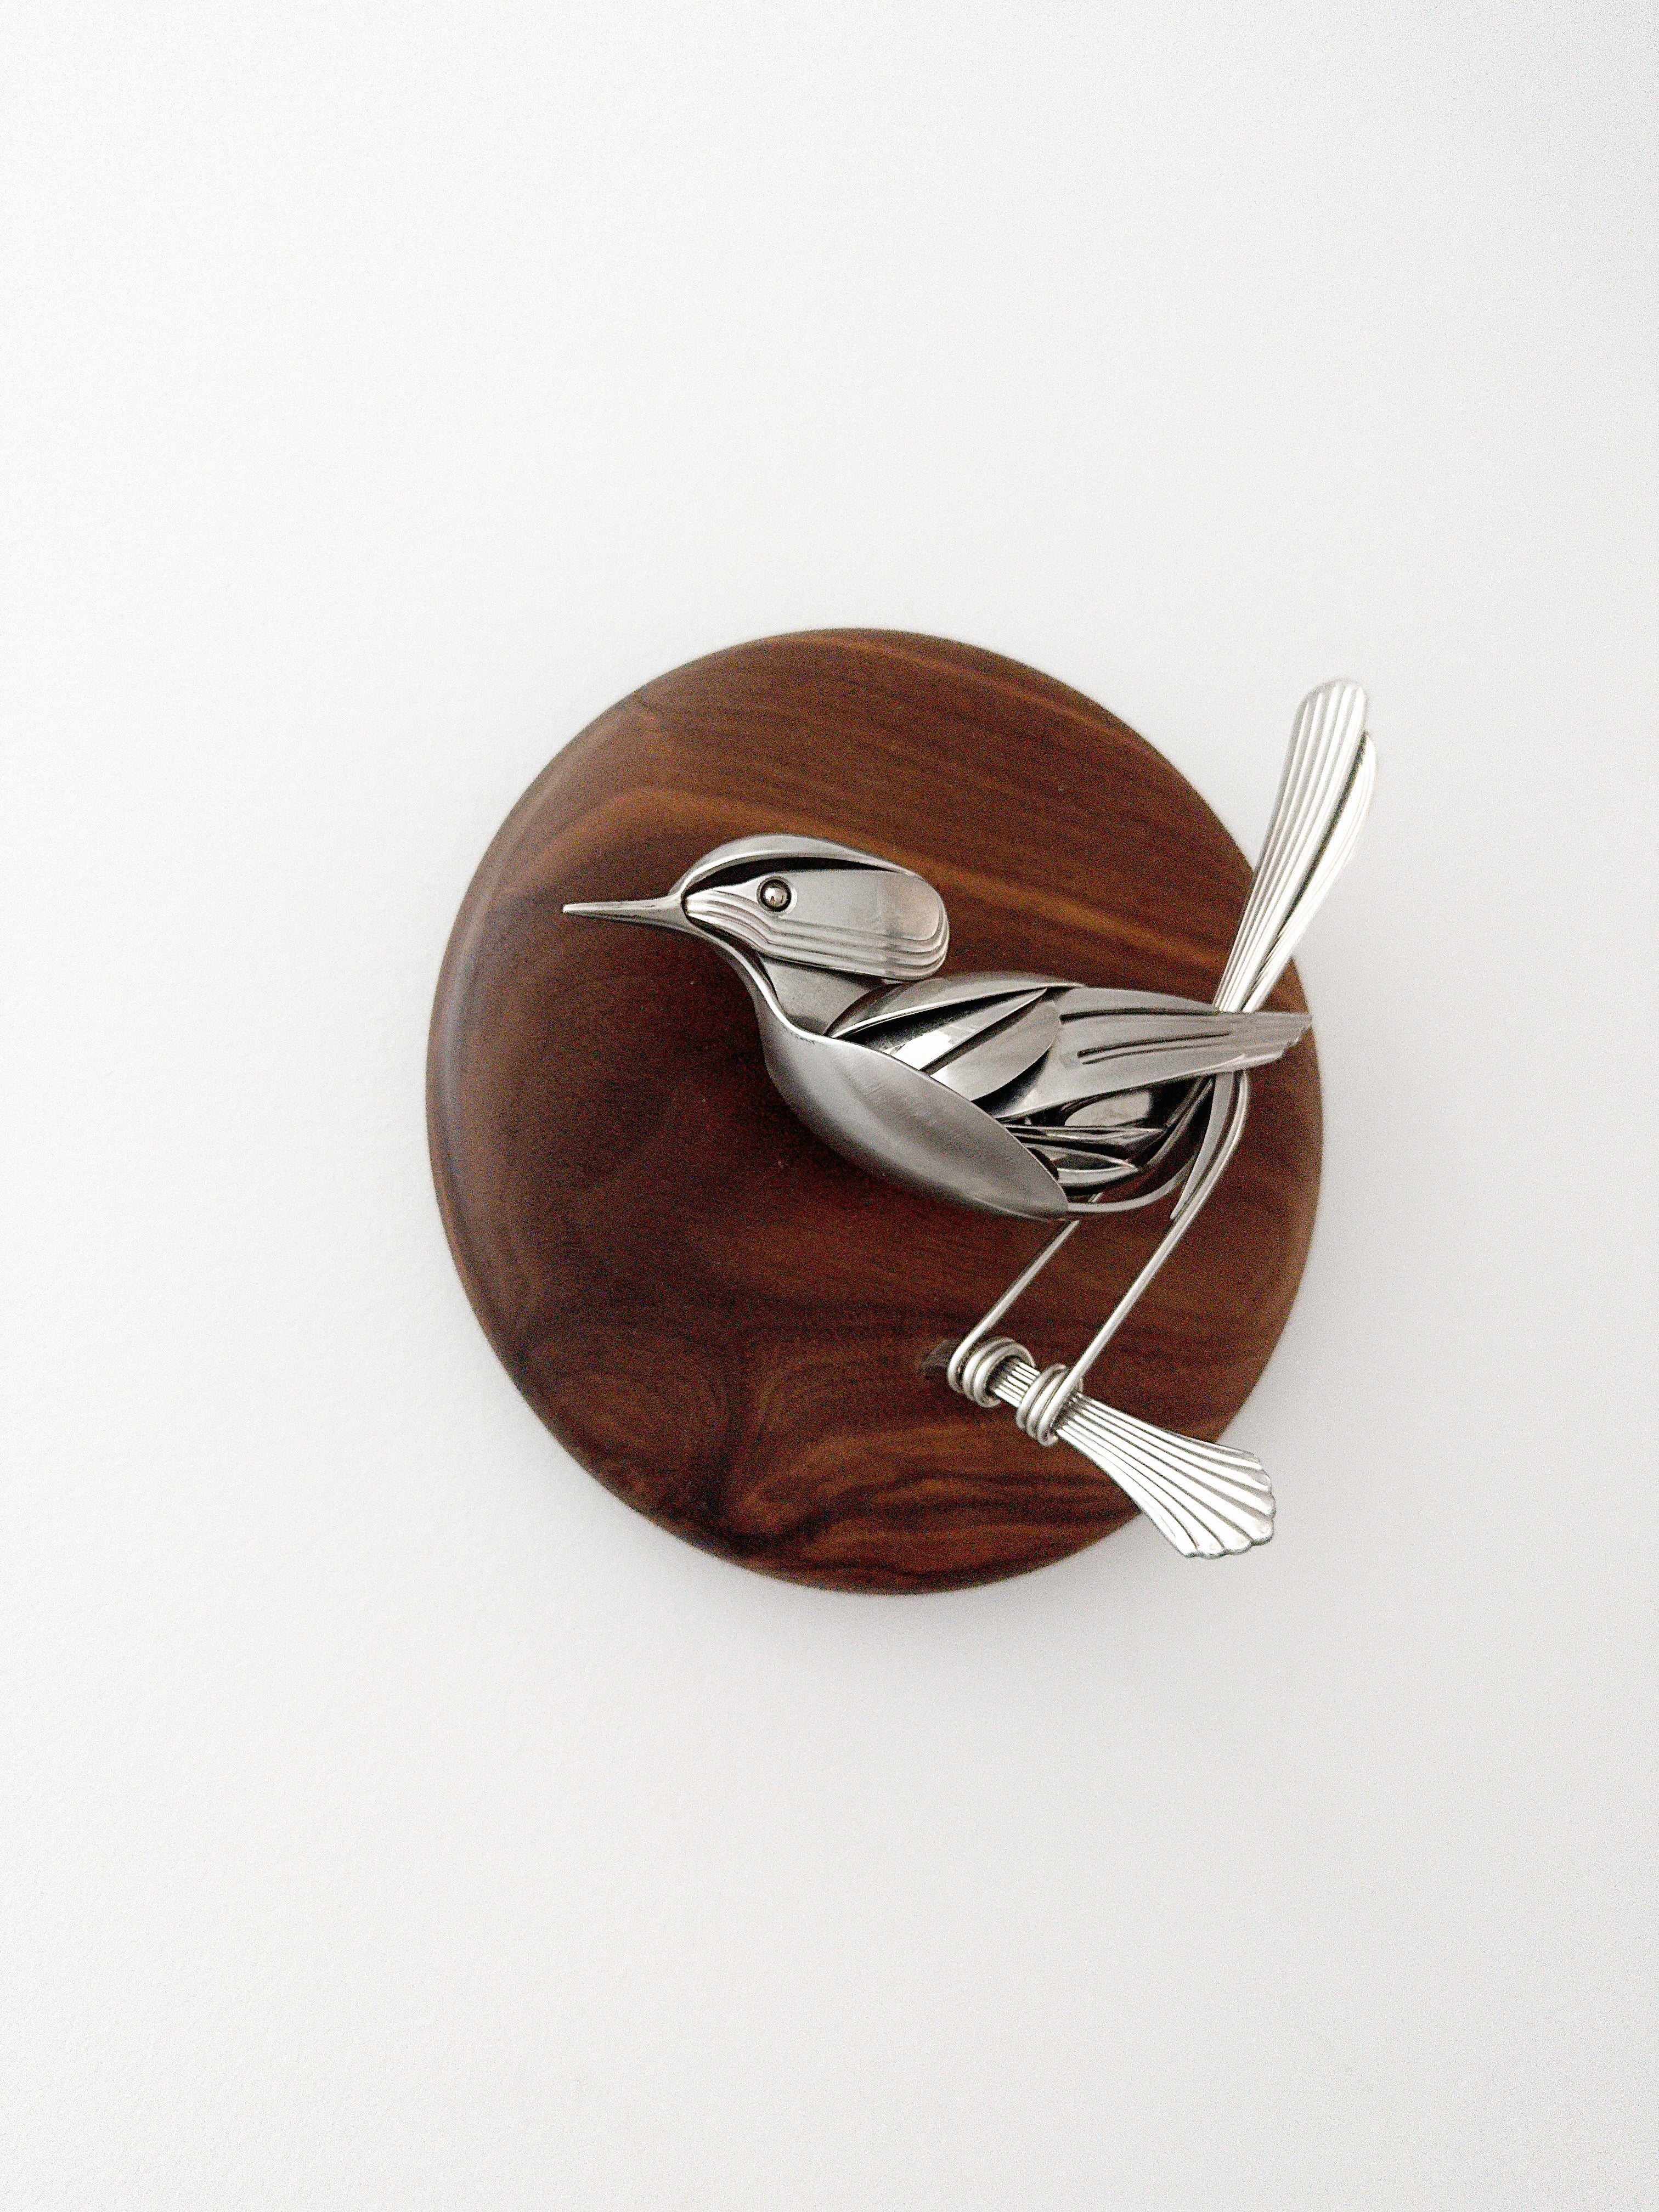 "Samuel" - Metal Bird Sculpture